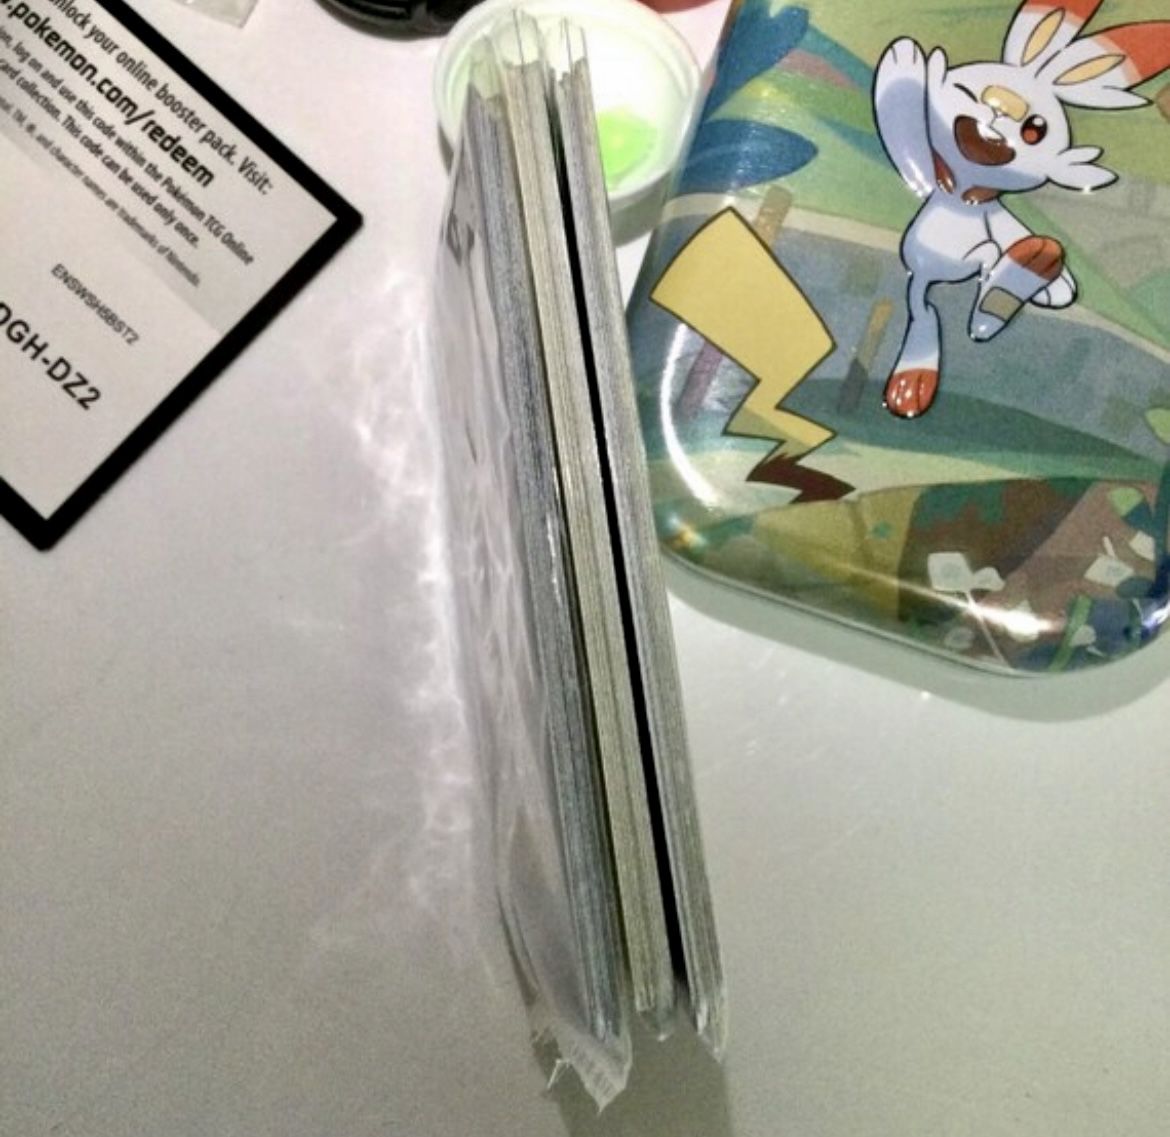 Pokemon Kangaskhan GX Box for Sale in Portland, OR - OfferUp